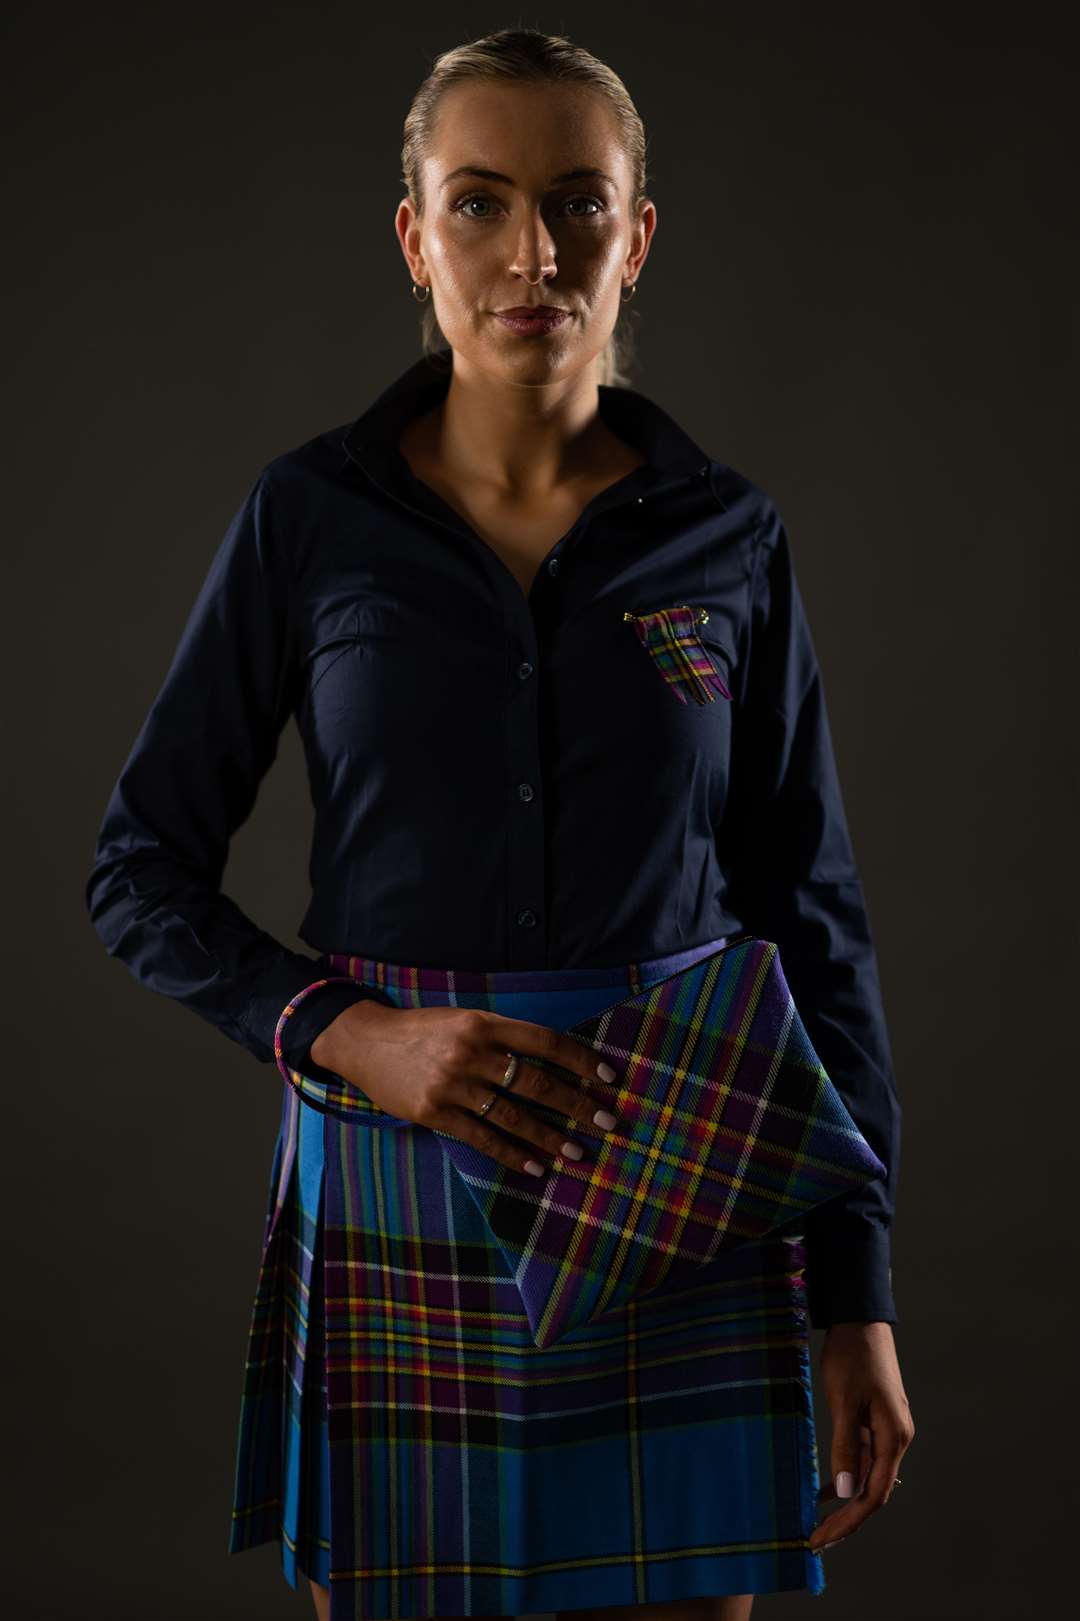 Sarah McPhail. Picture: MBP Ltd for Team Scotland